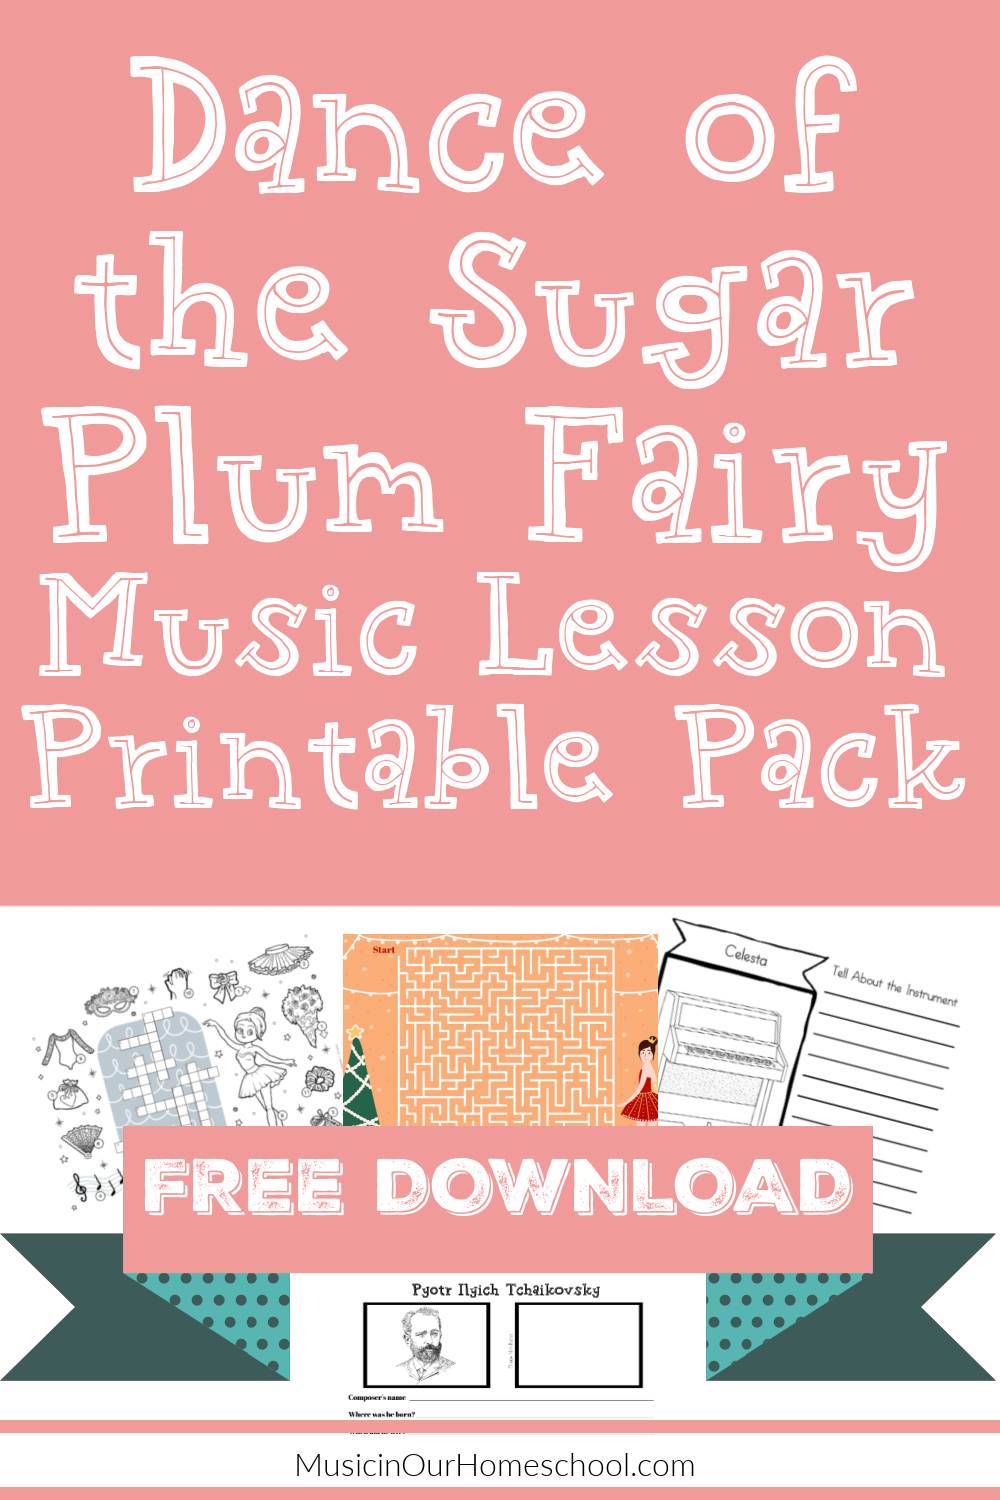 Dance of the Sugar Plum Fairy Music Lesson Printable Pack 